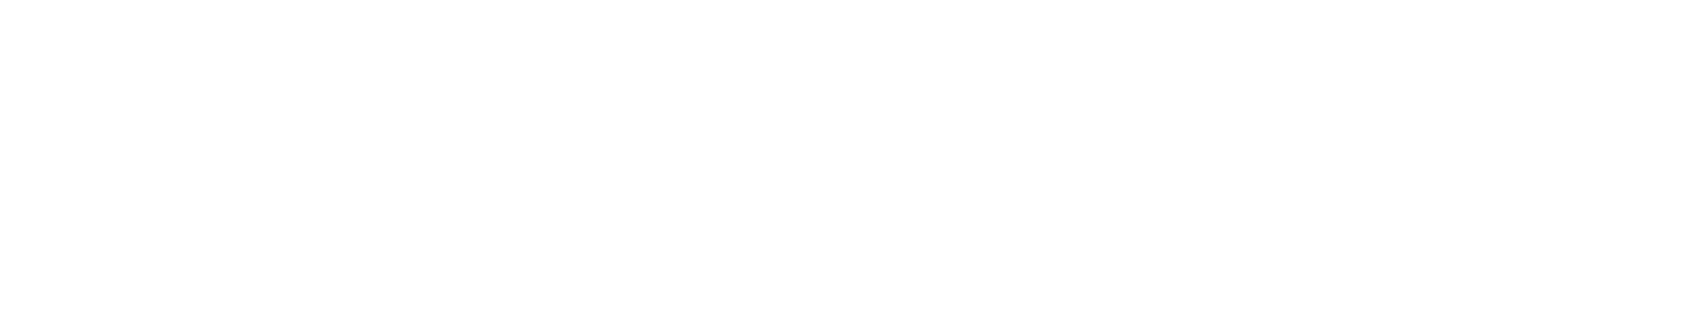 BiblioLabs official logo